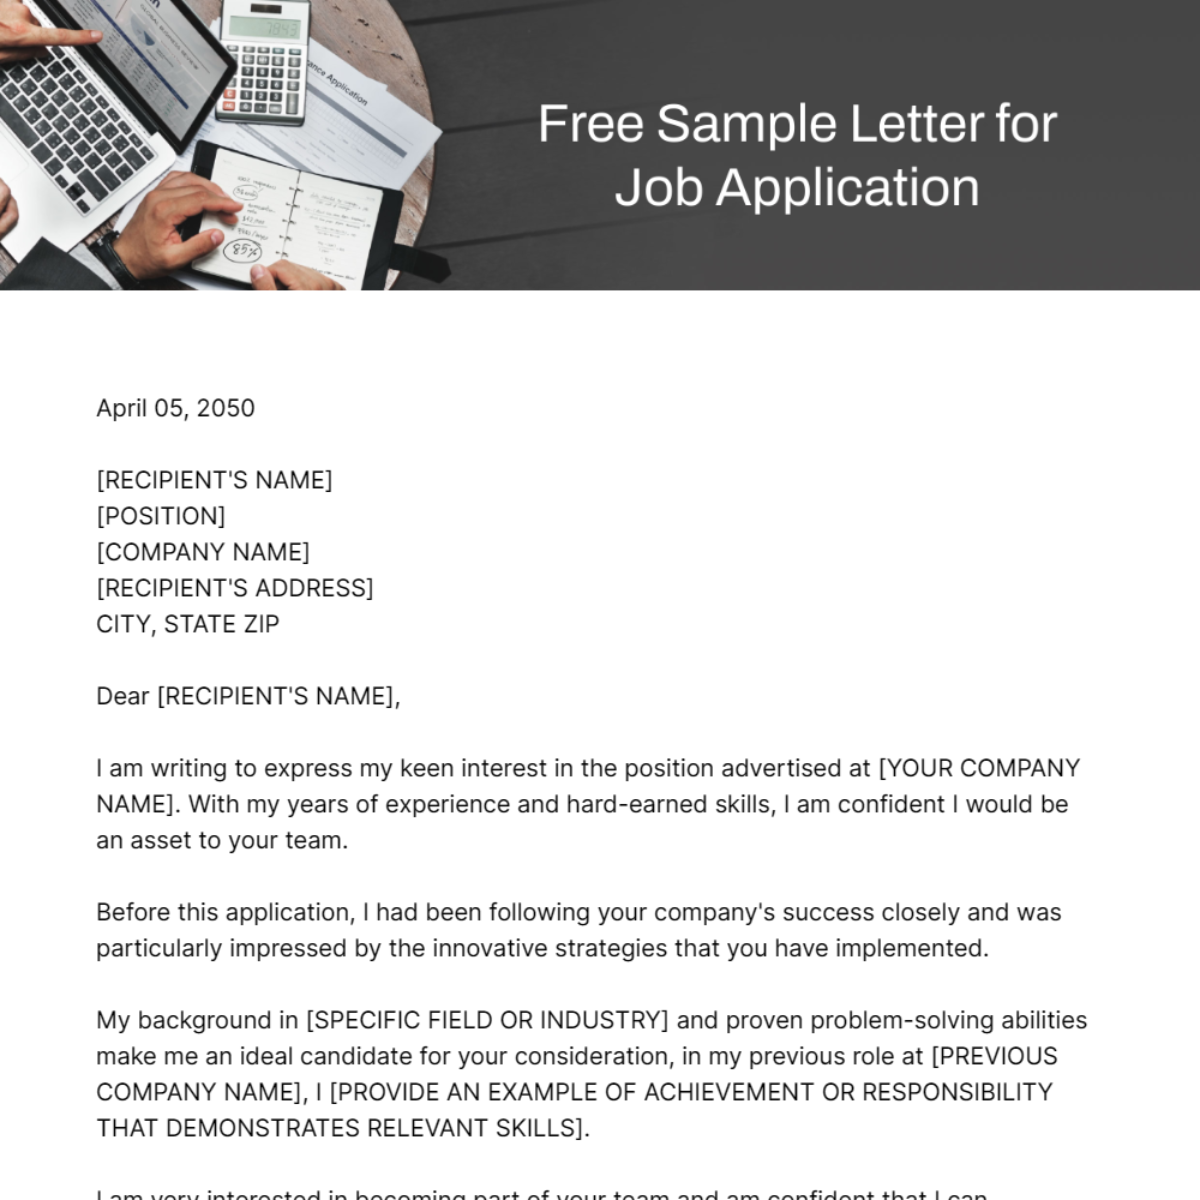 Free Sample Letter for Job Application Template